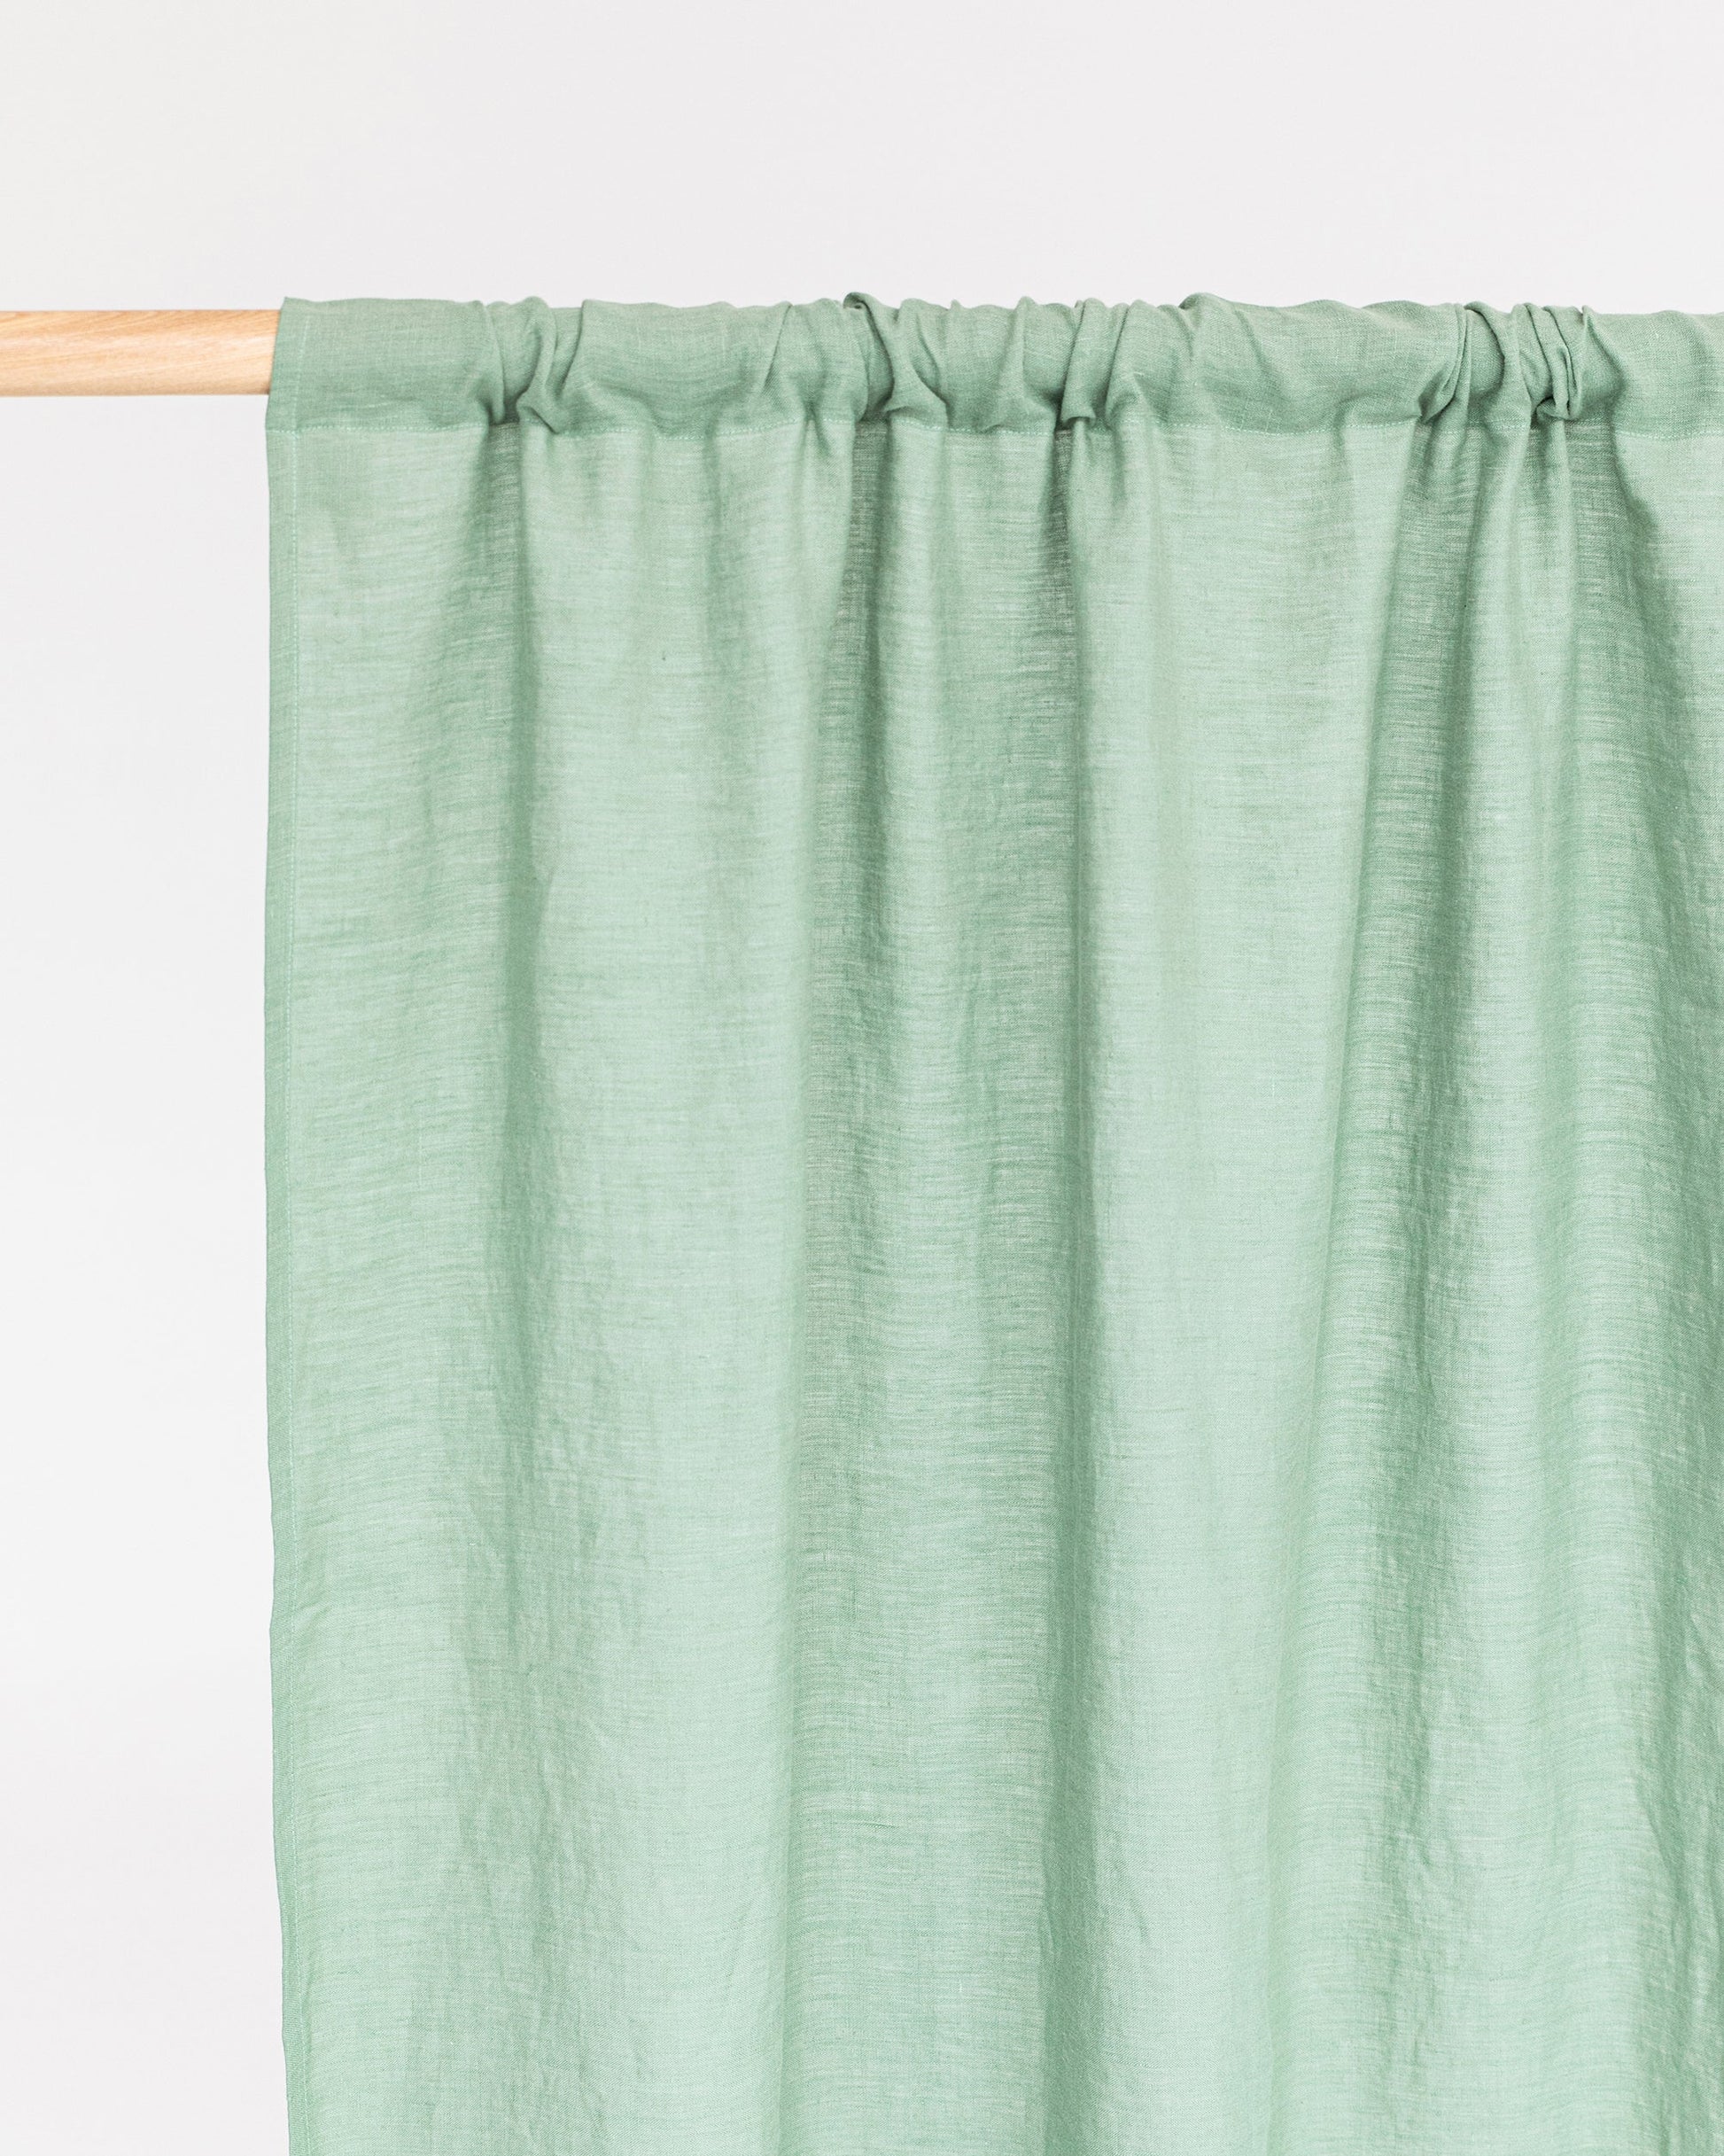 Rod pocket linen curtain panel (1 pcs) in Matcha green - MagicLinen